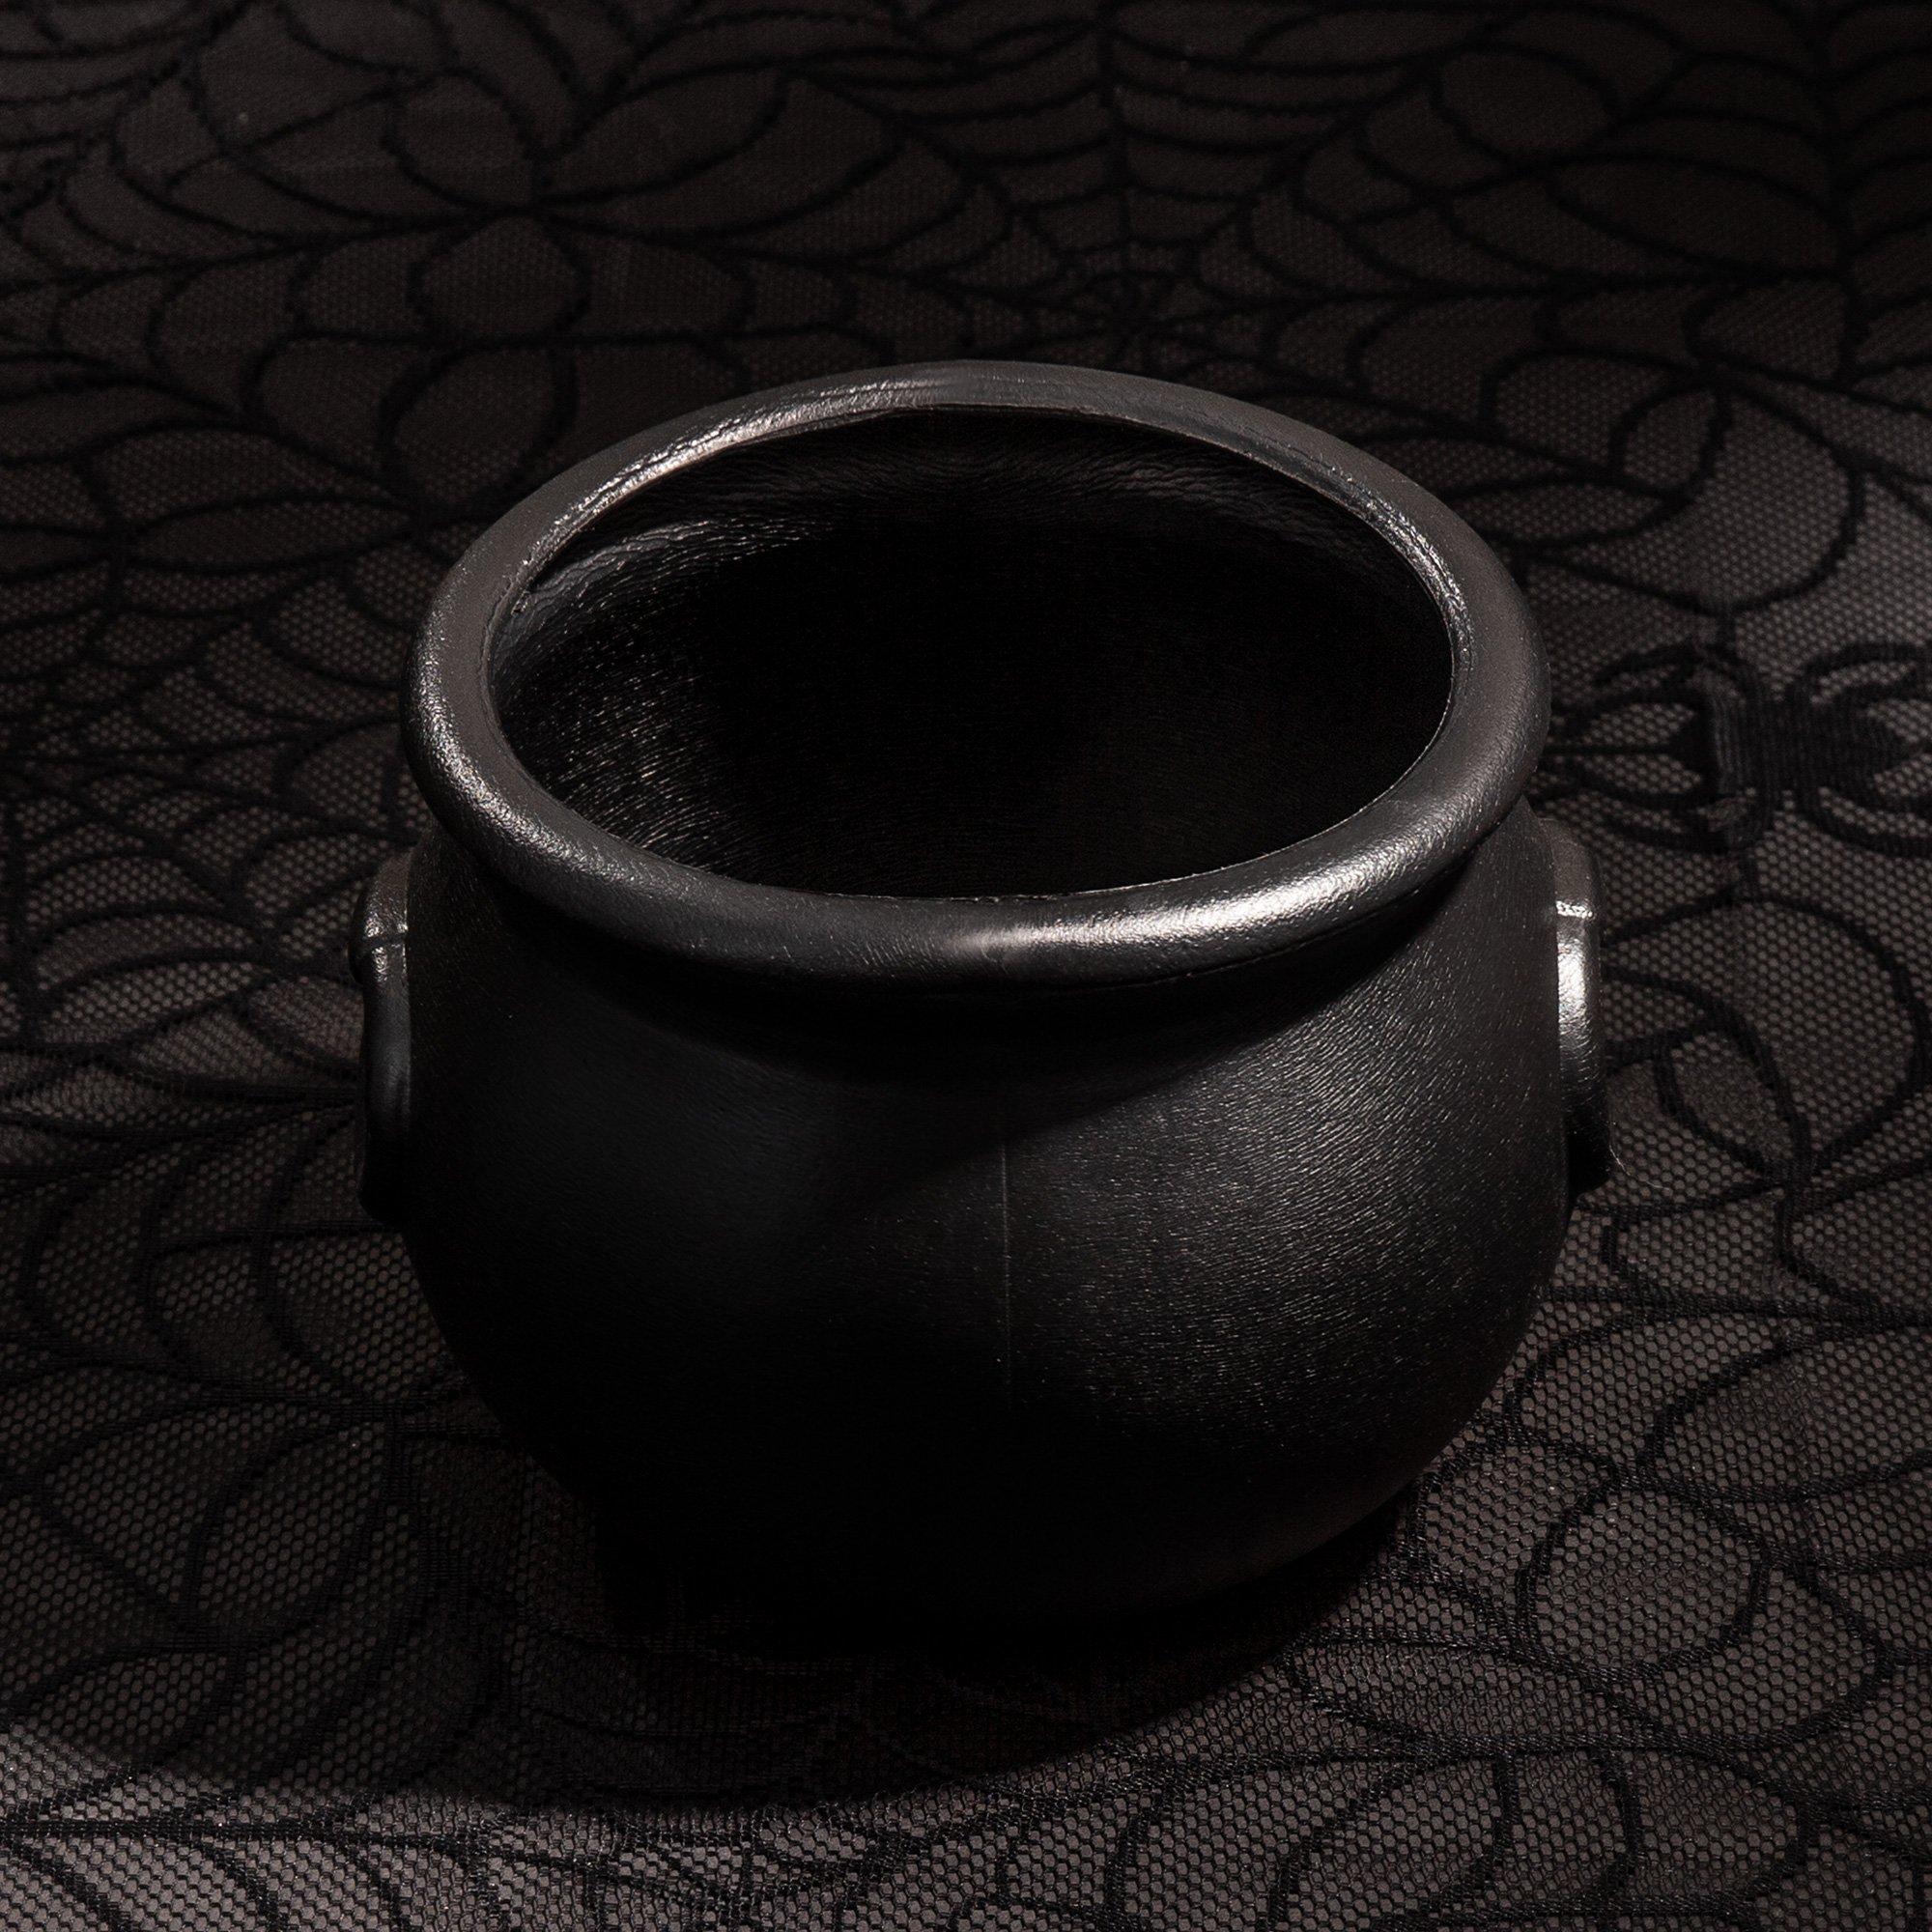 Small Black Cauldron